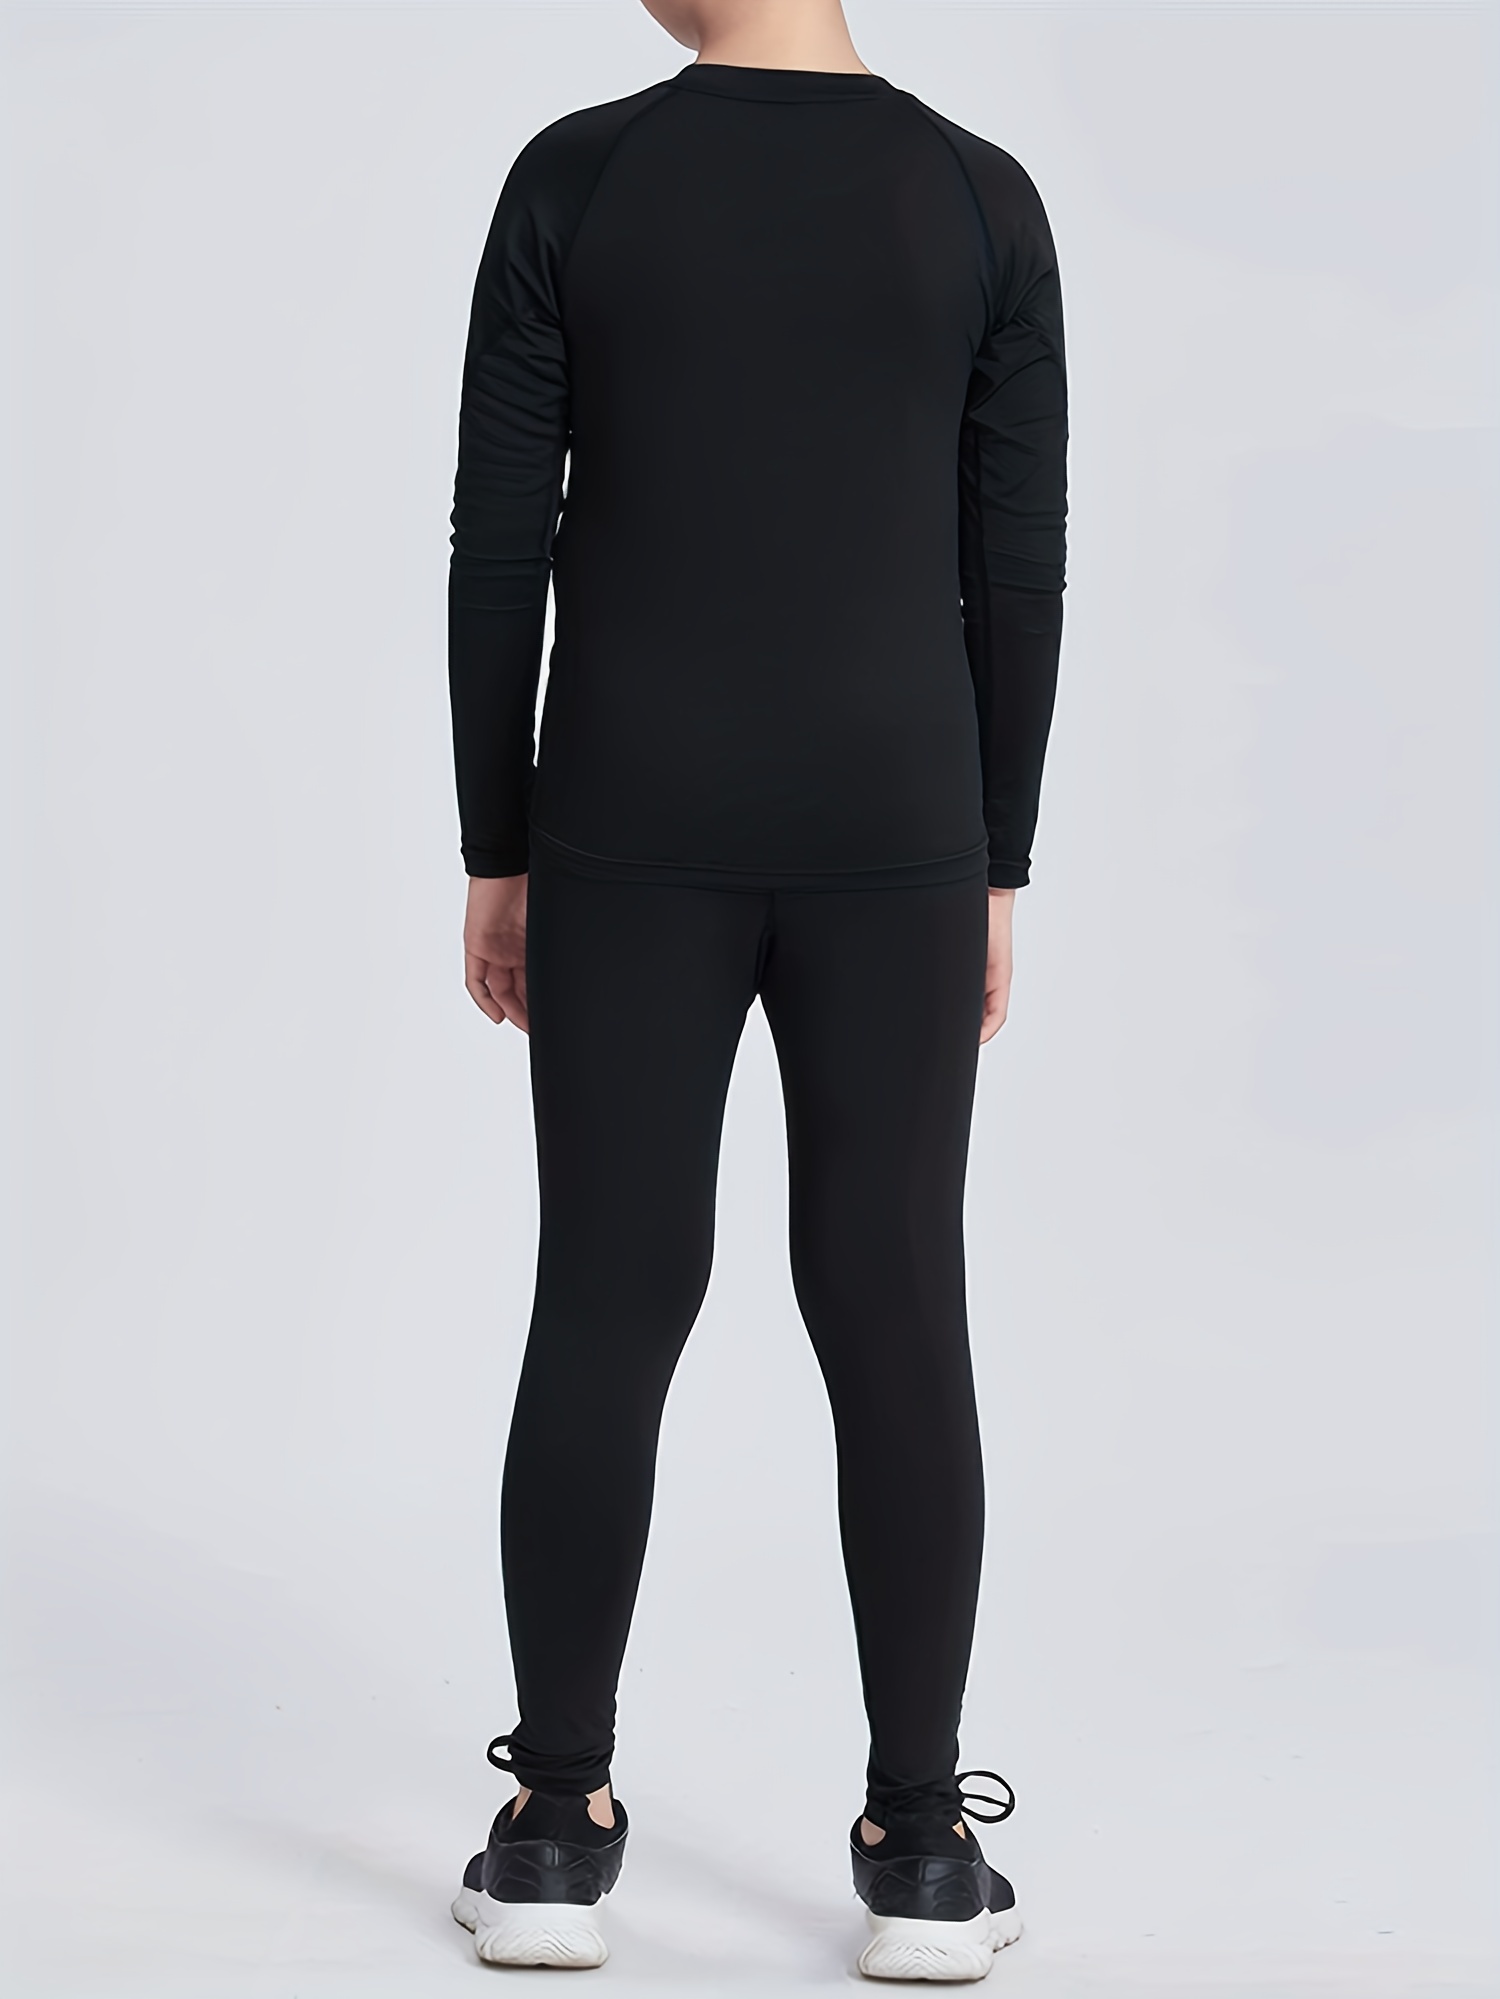 Active Winter thermal underwear - Men's pants – anthracite